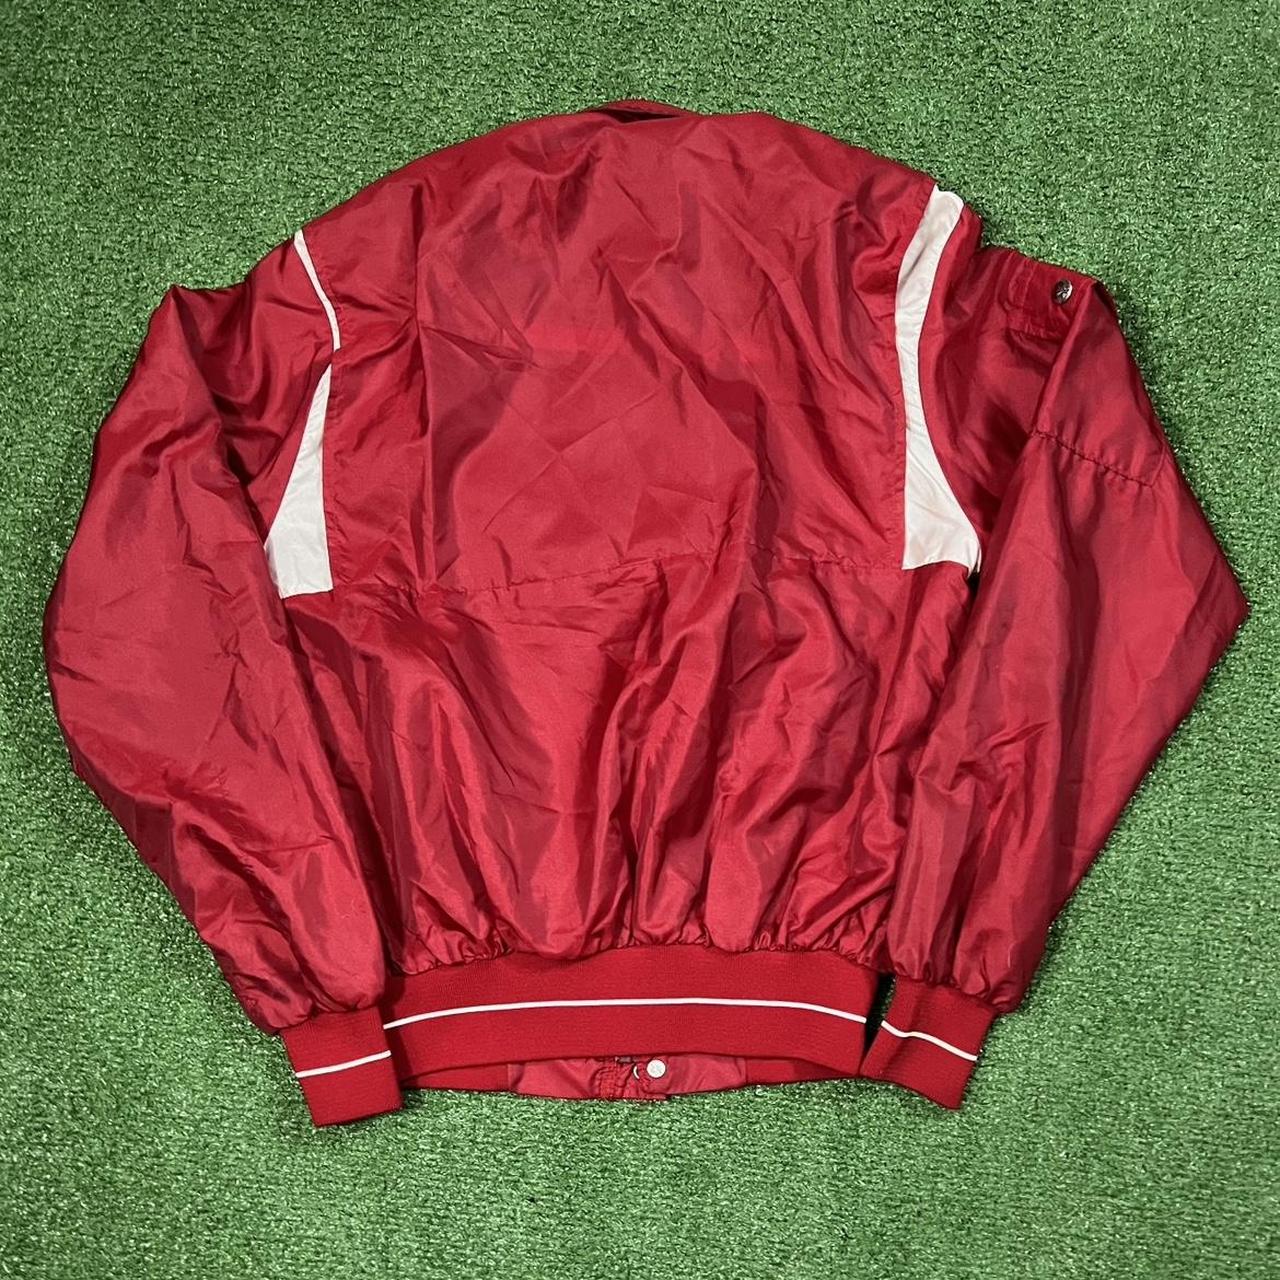 Vintage 80’s Winston Racing Bomber Racing jacket - Depop